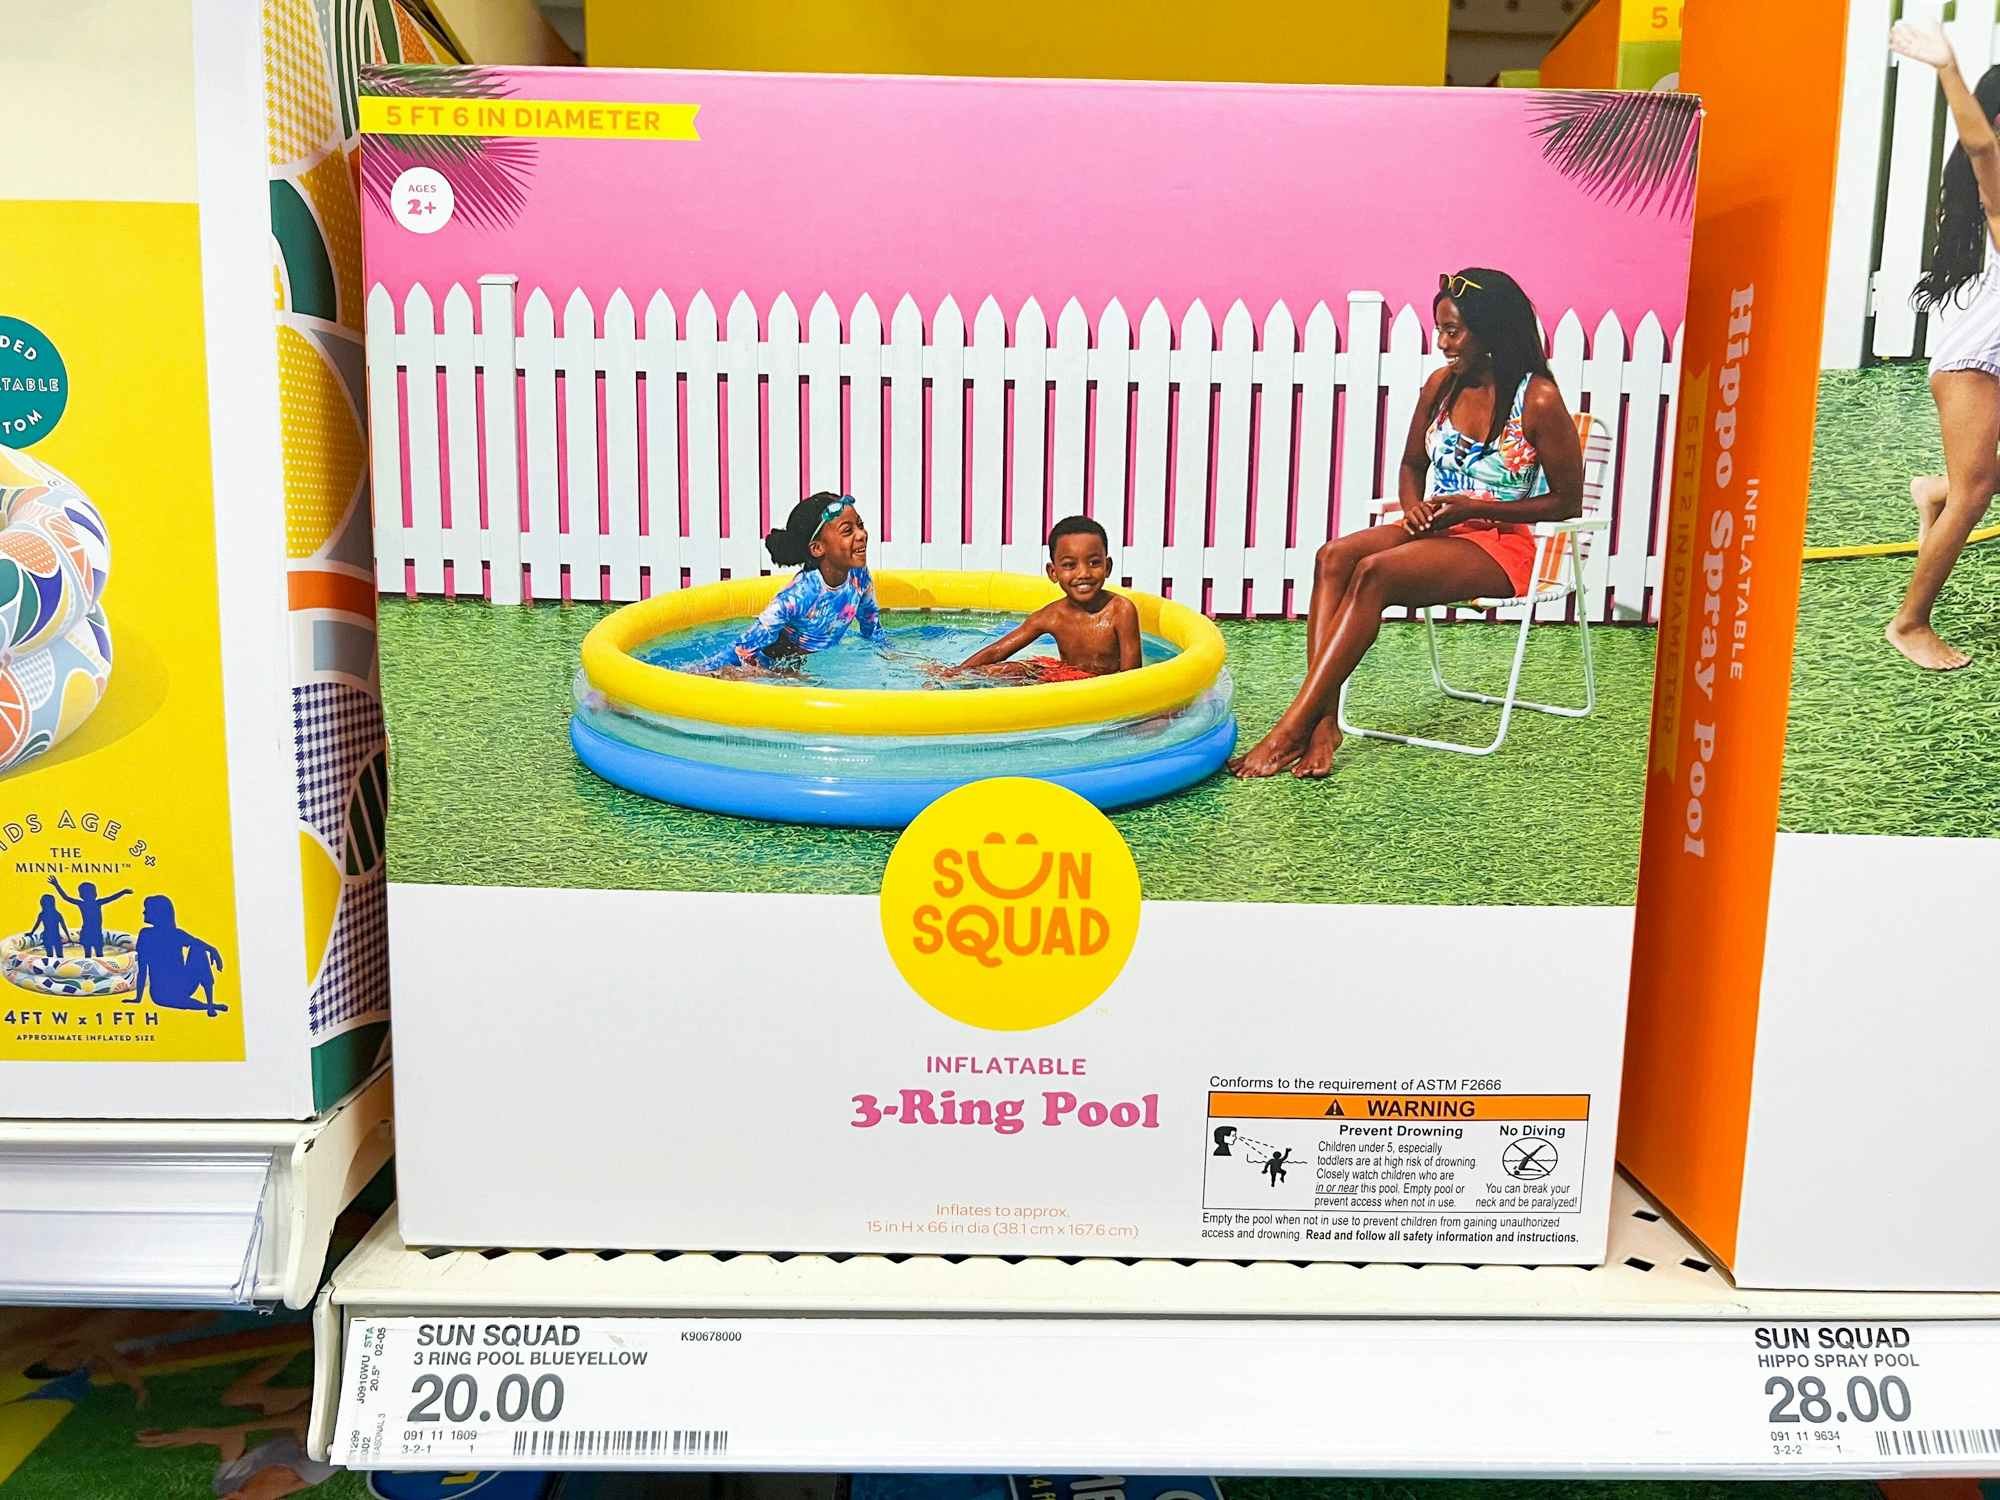 target-sun-squad-summer-pool-toys-kiddie-11